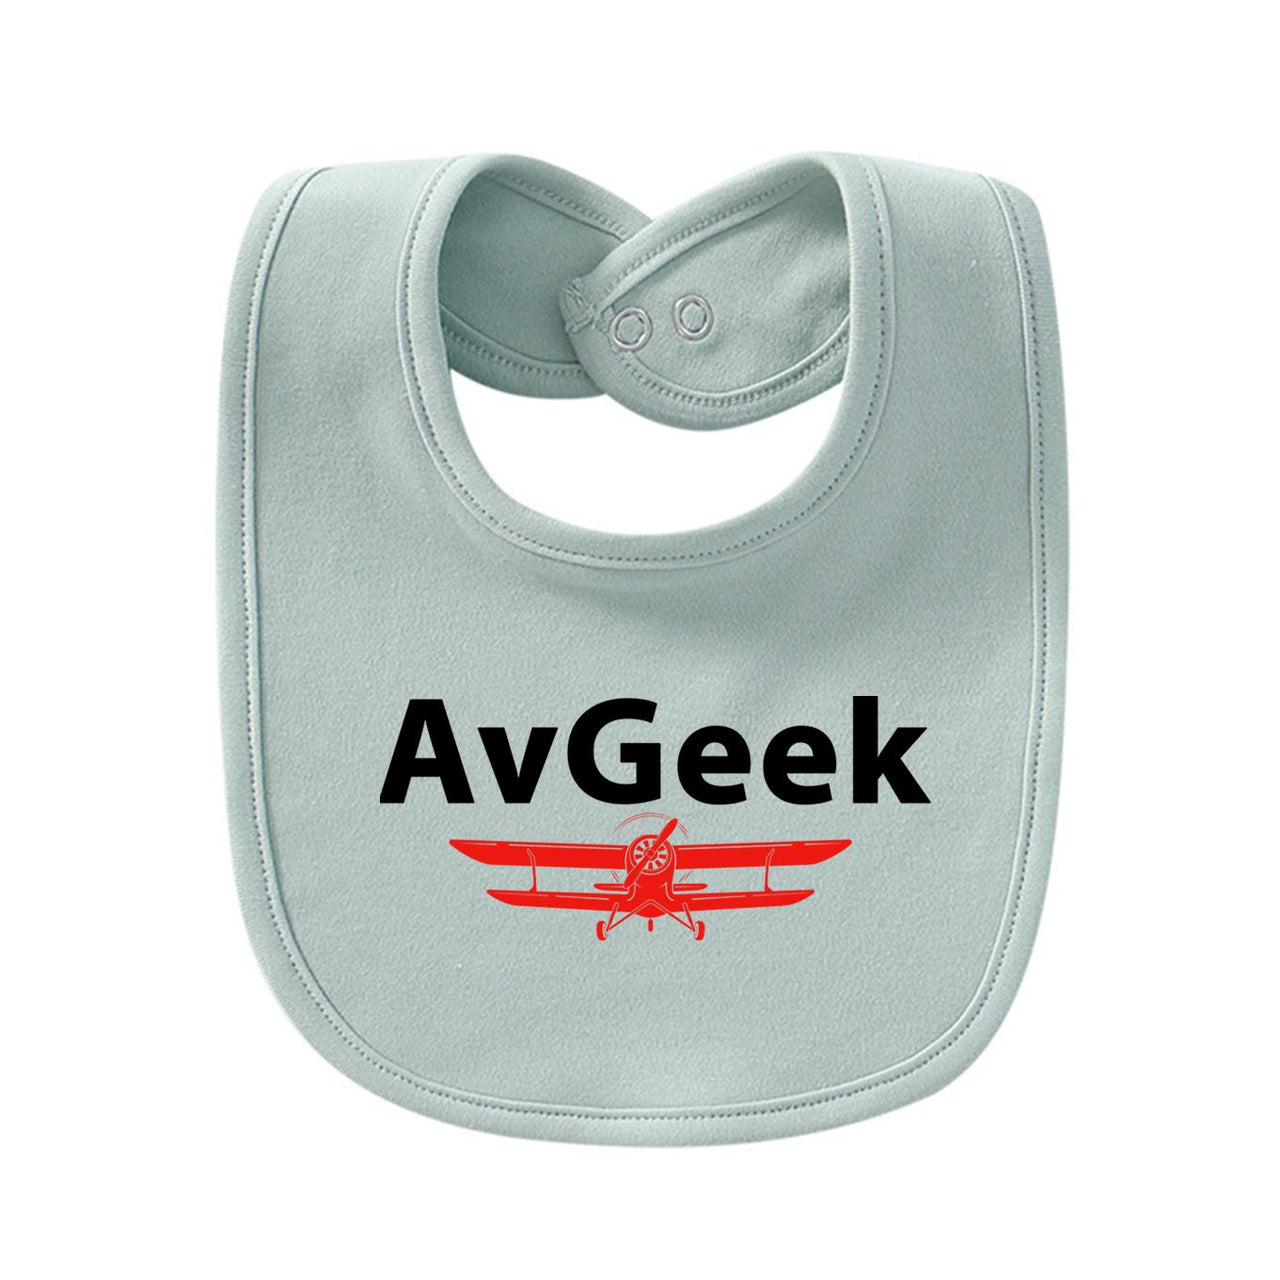 Avgeek Designed Baby Saliva & Feeding Towels